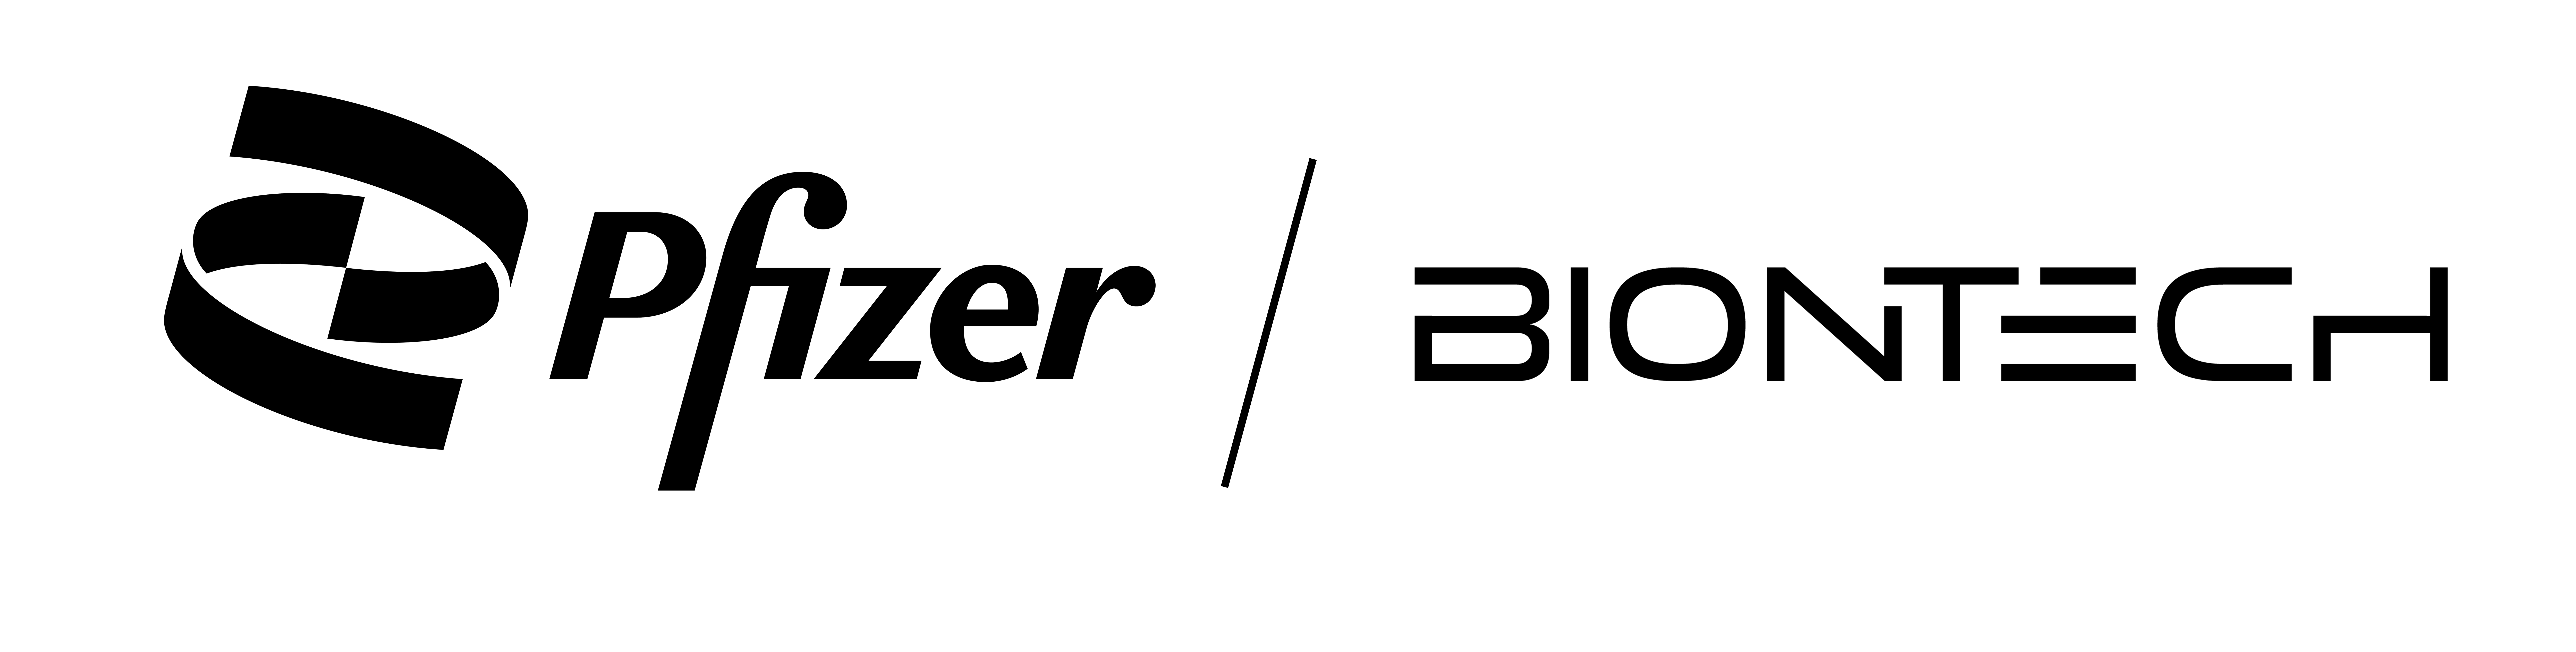 Pfizer Biontech logo